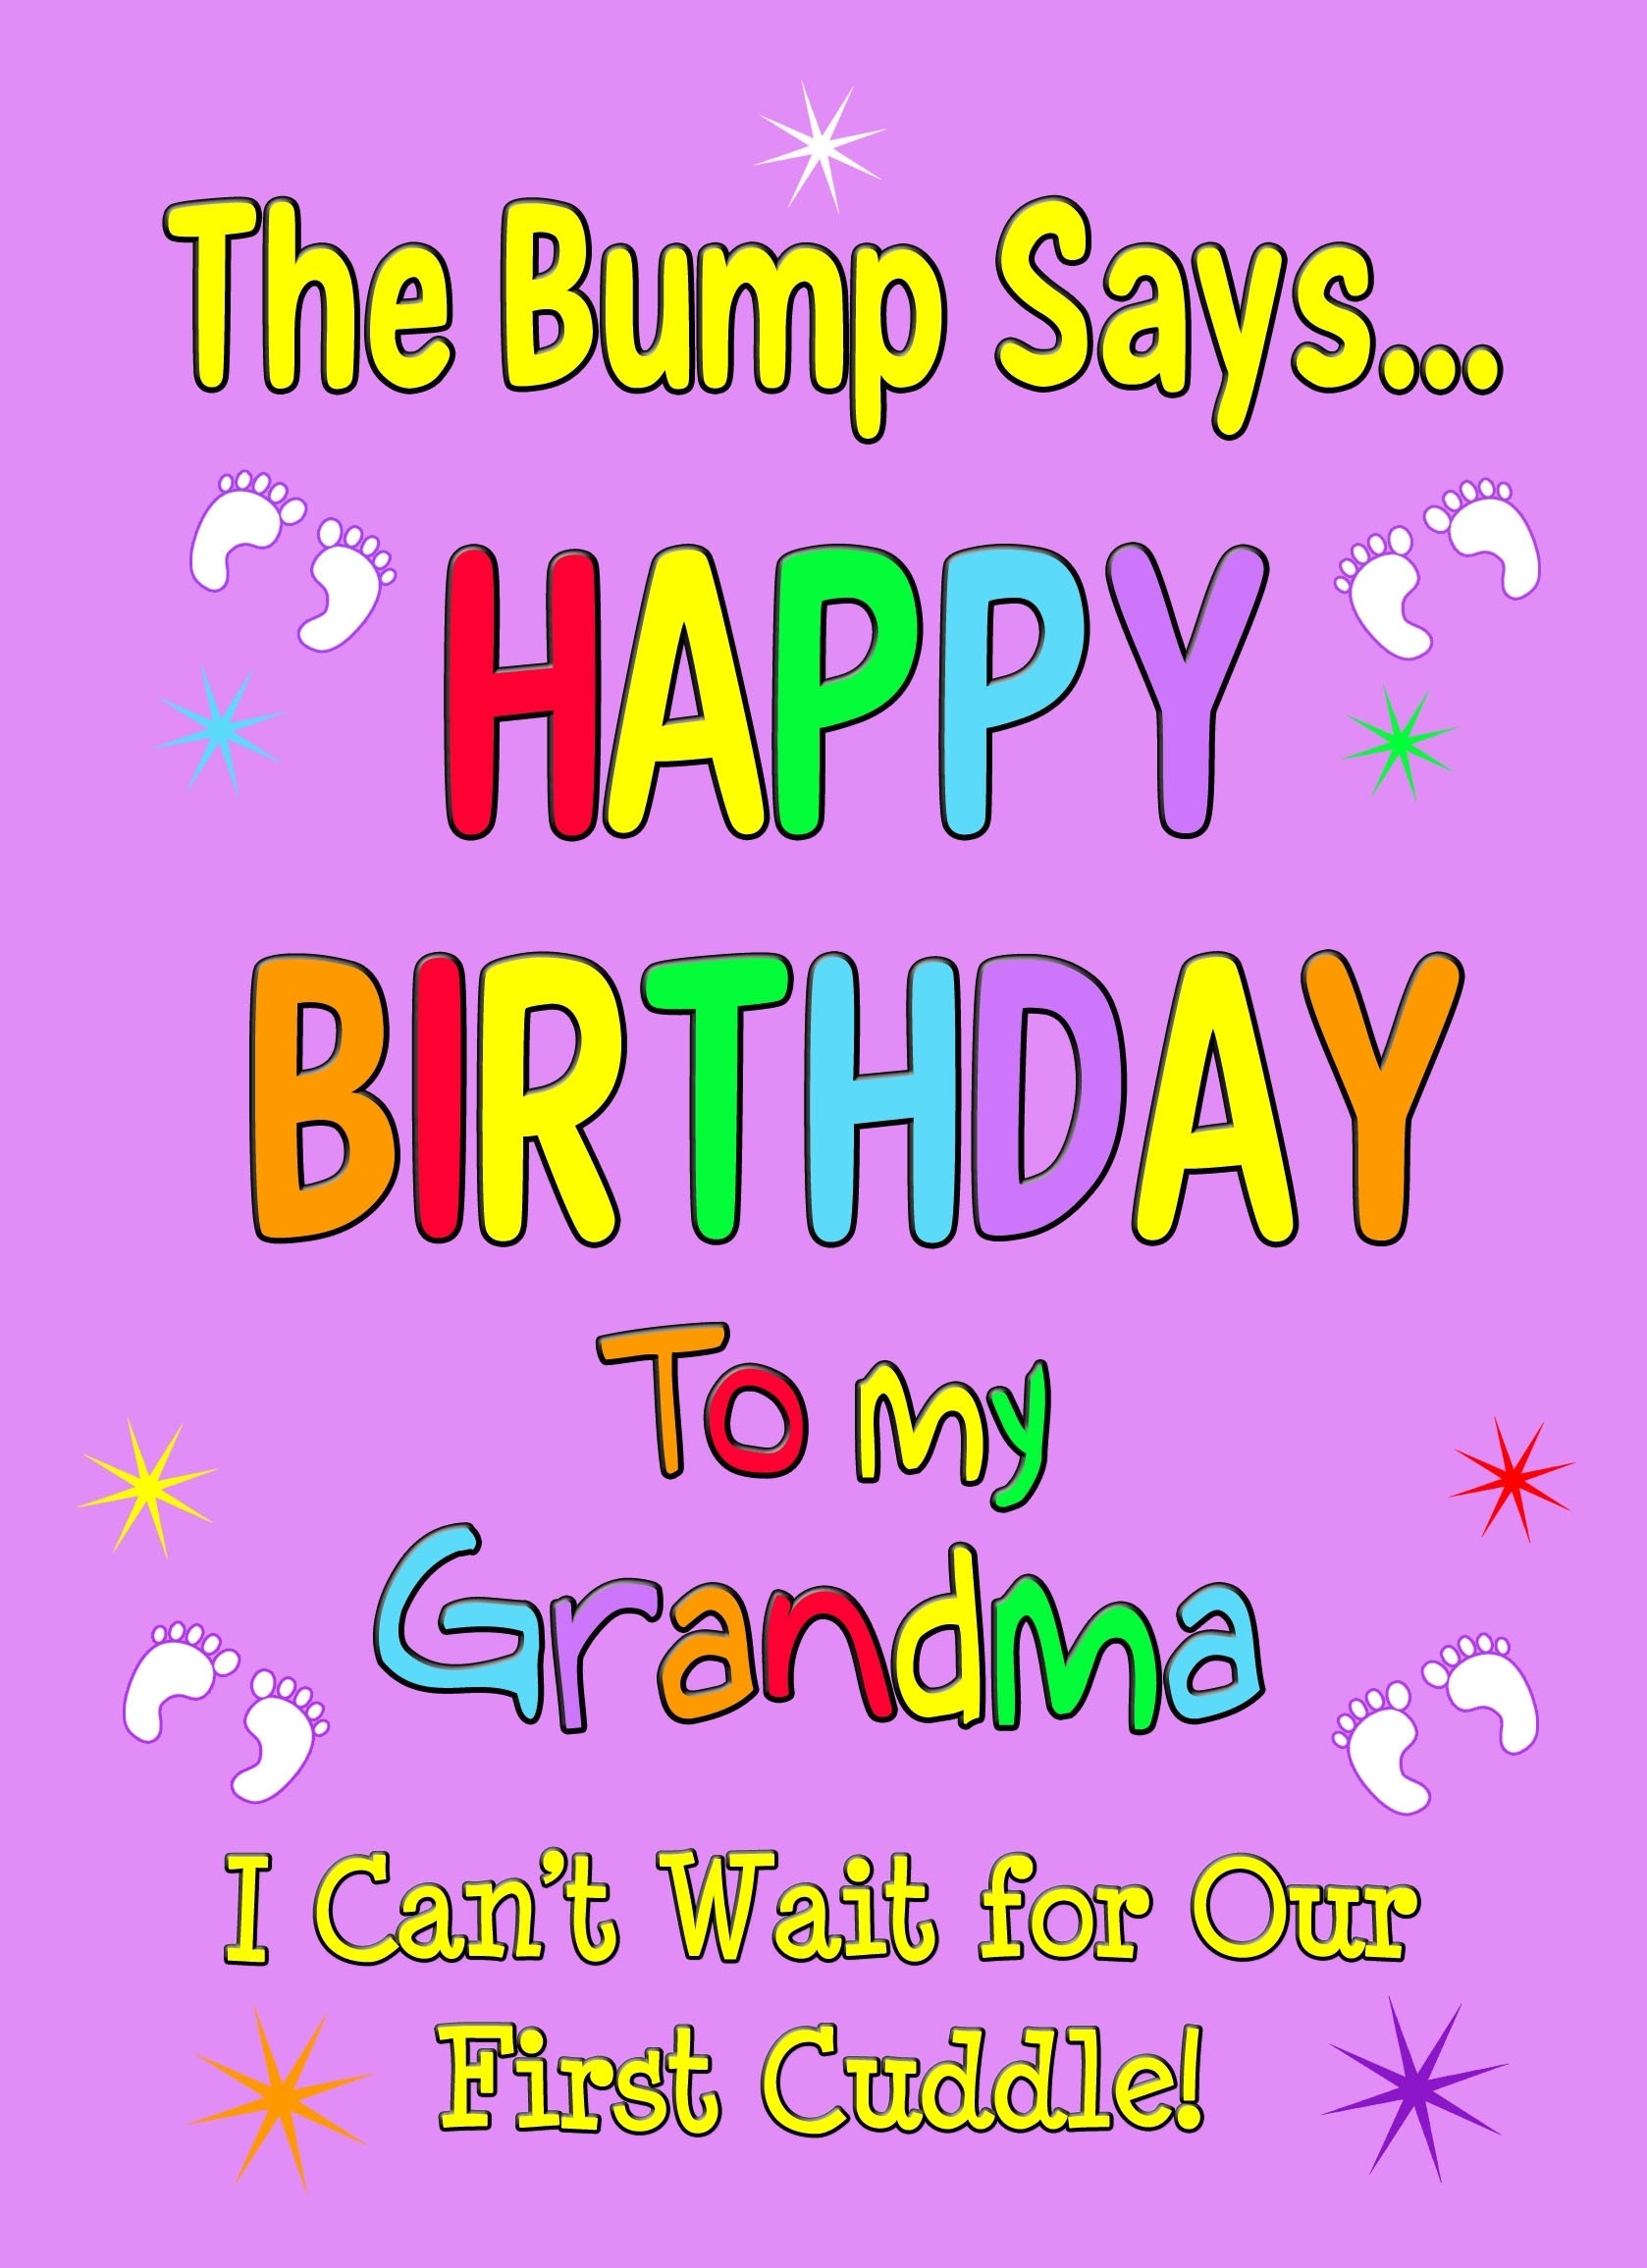 From The Bump Pregnancy Birthday Card (Grandma, Purple)